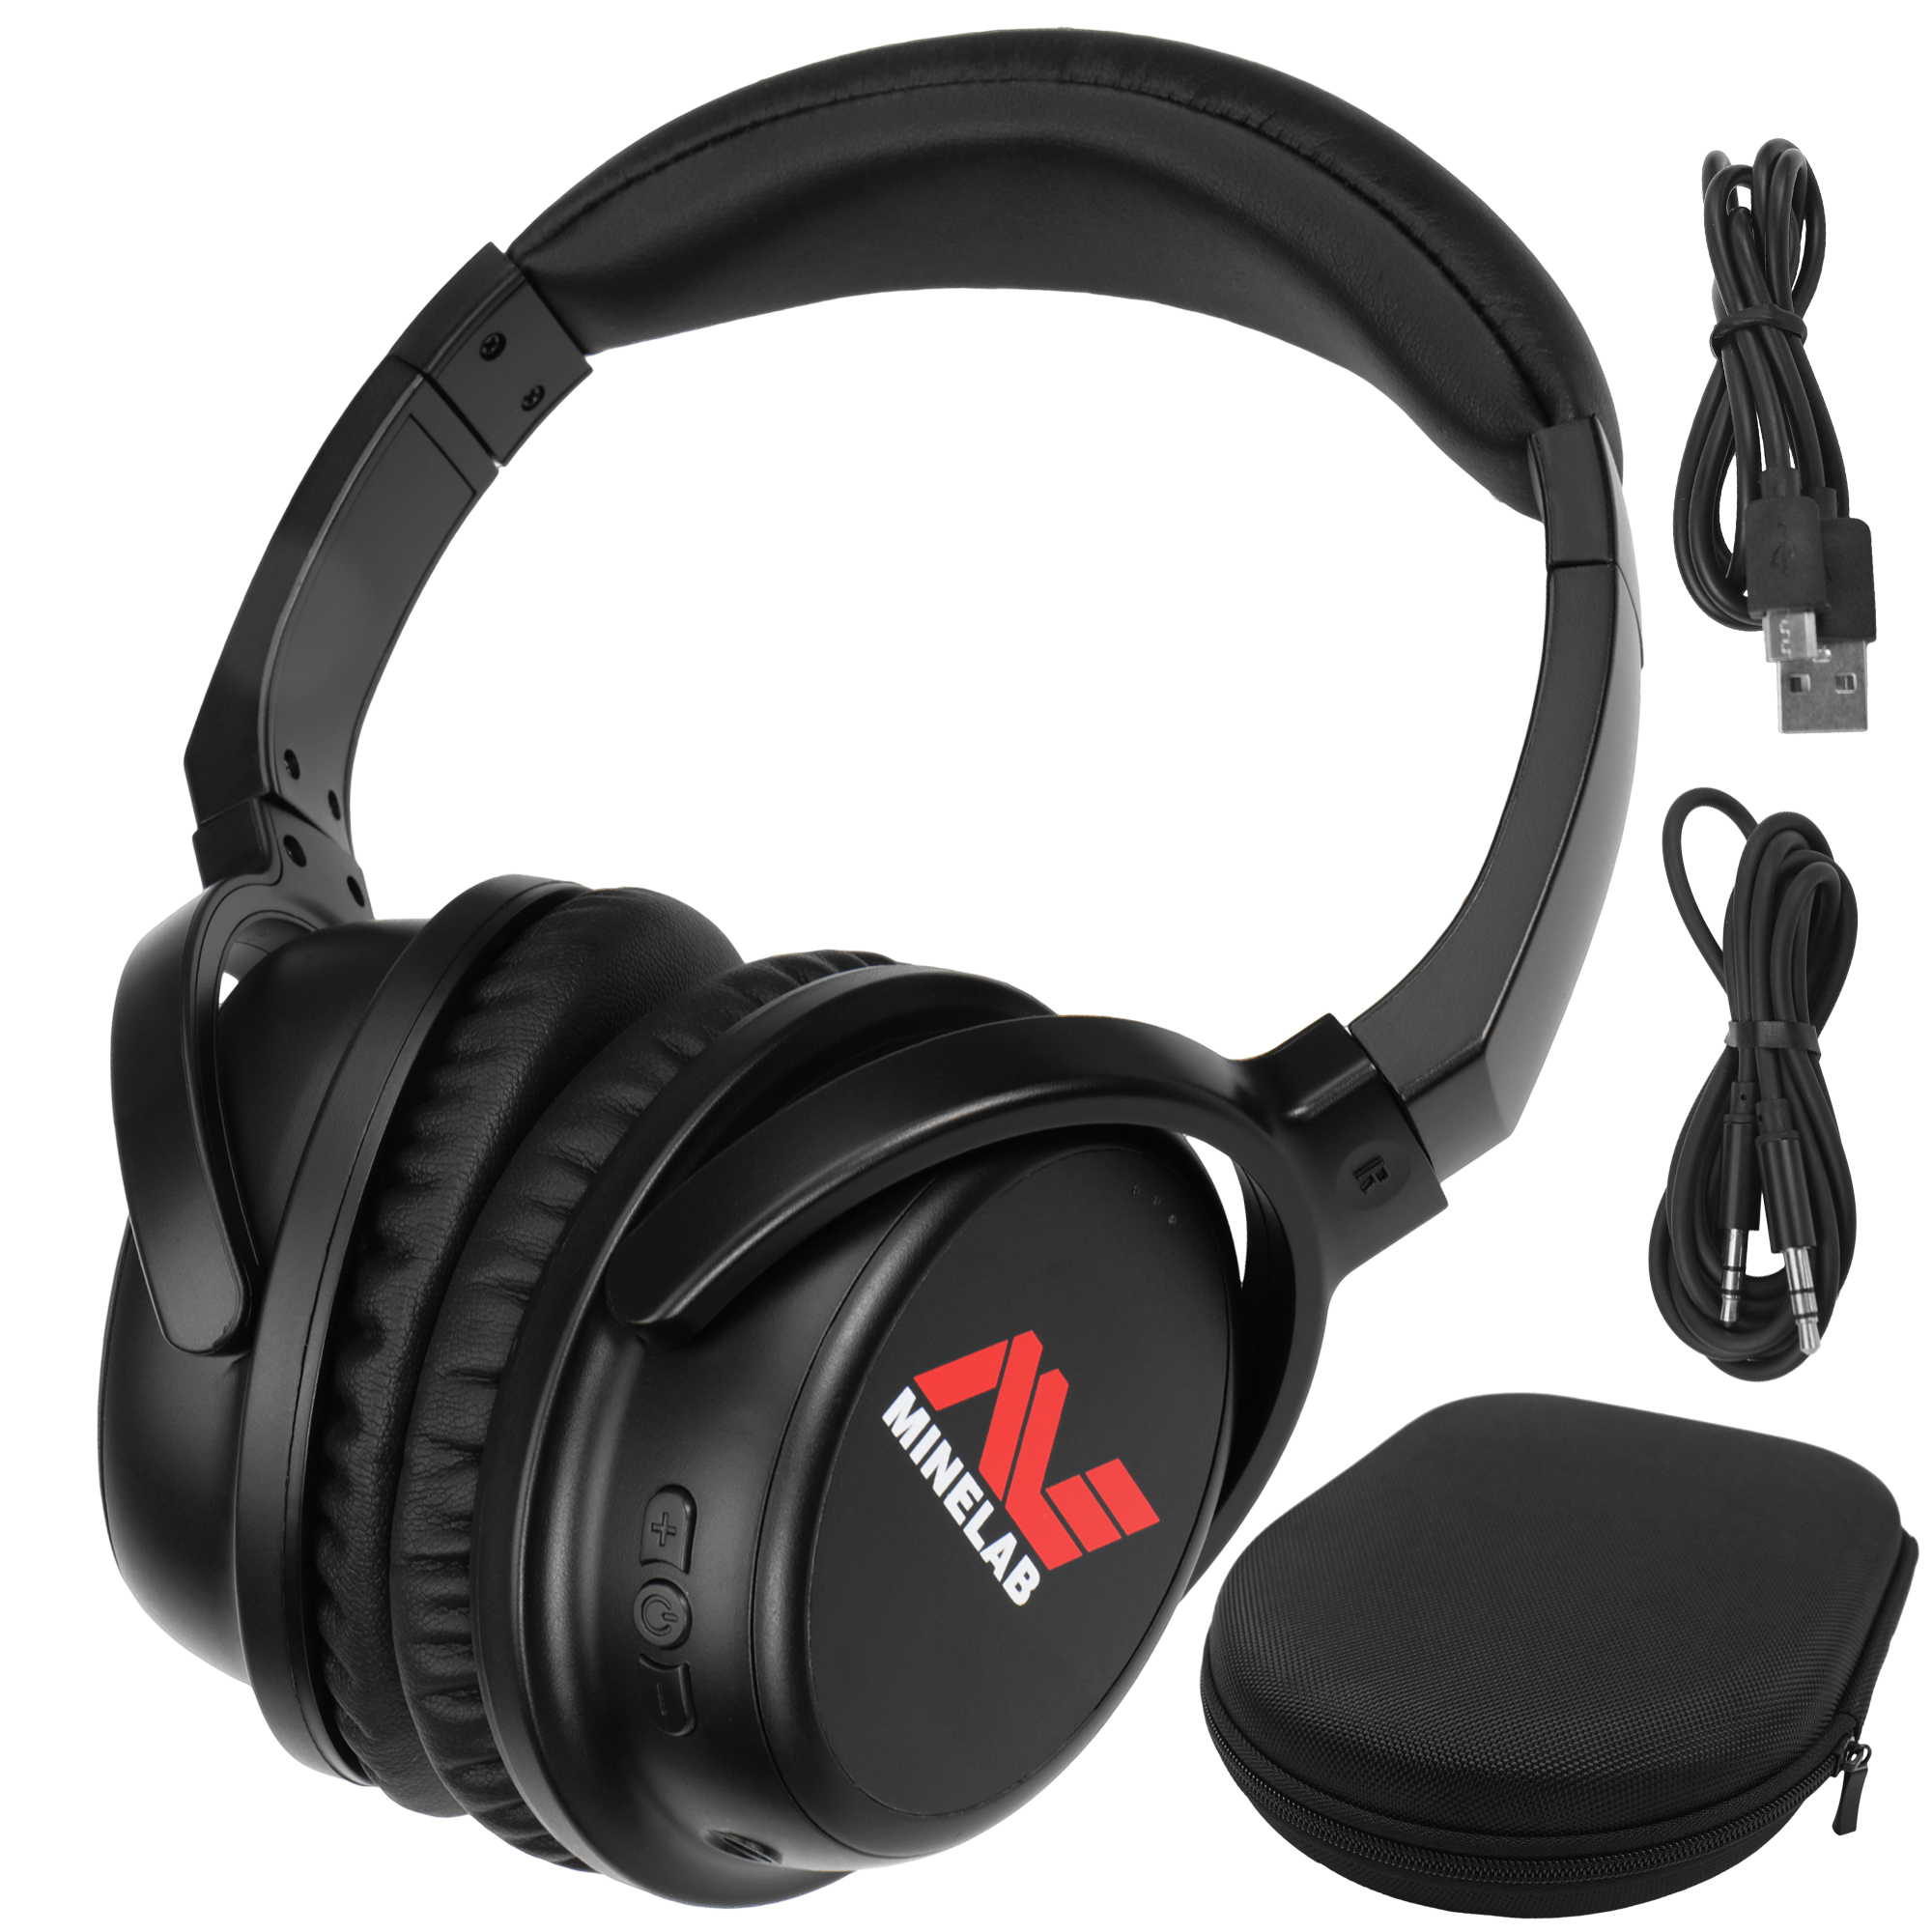 Minelab Equinox Wireless Headphones